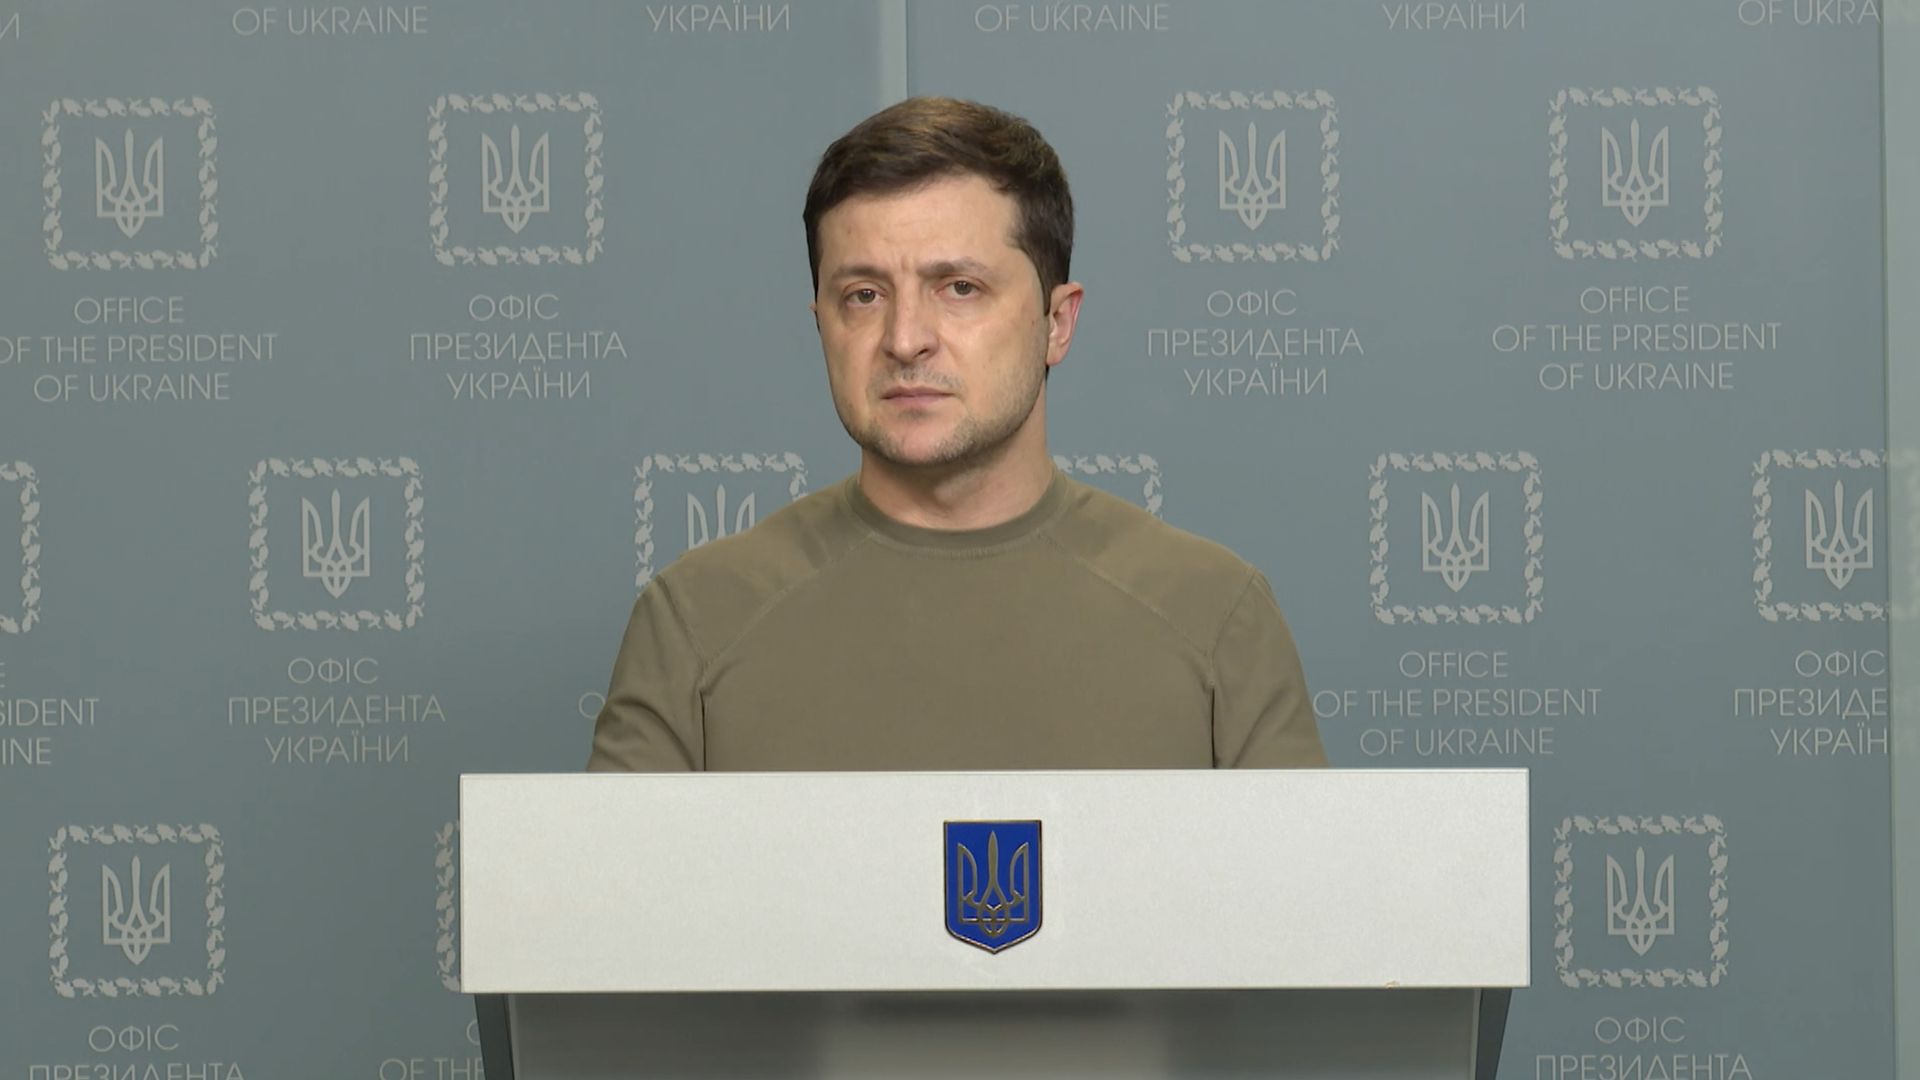 Ukrainian President Volodymyr Zelenskyy holds a press conference in regard of Russia's attack on Ukraine in Kiev, Ukraine on February 24, 2022